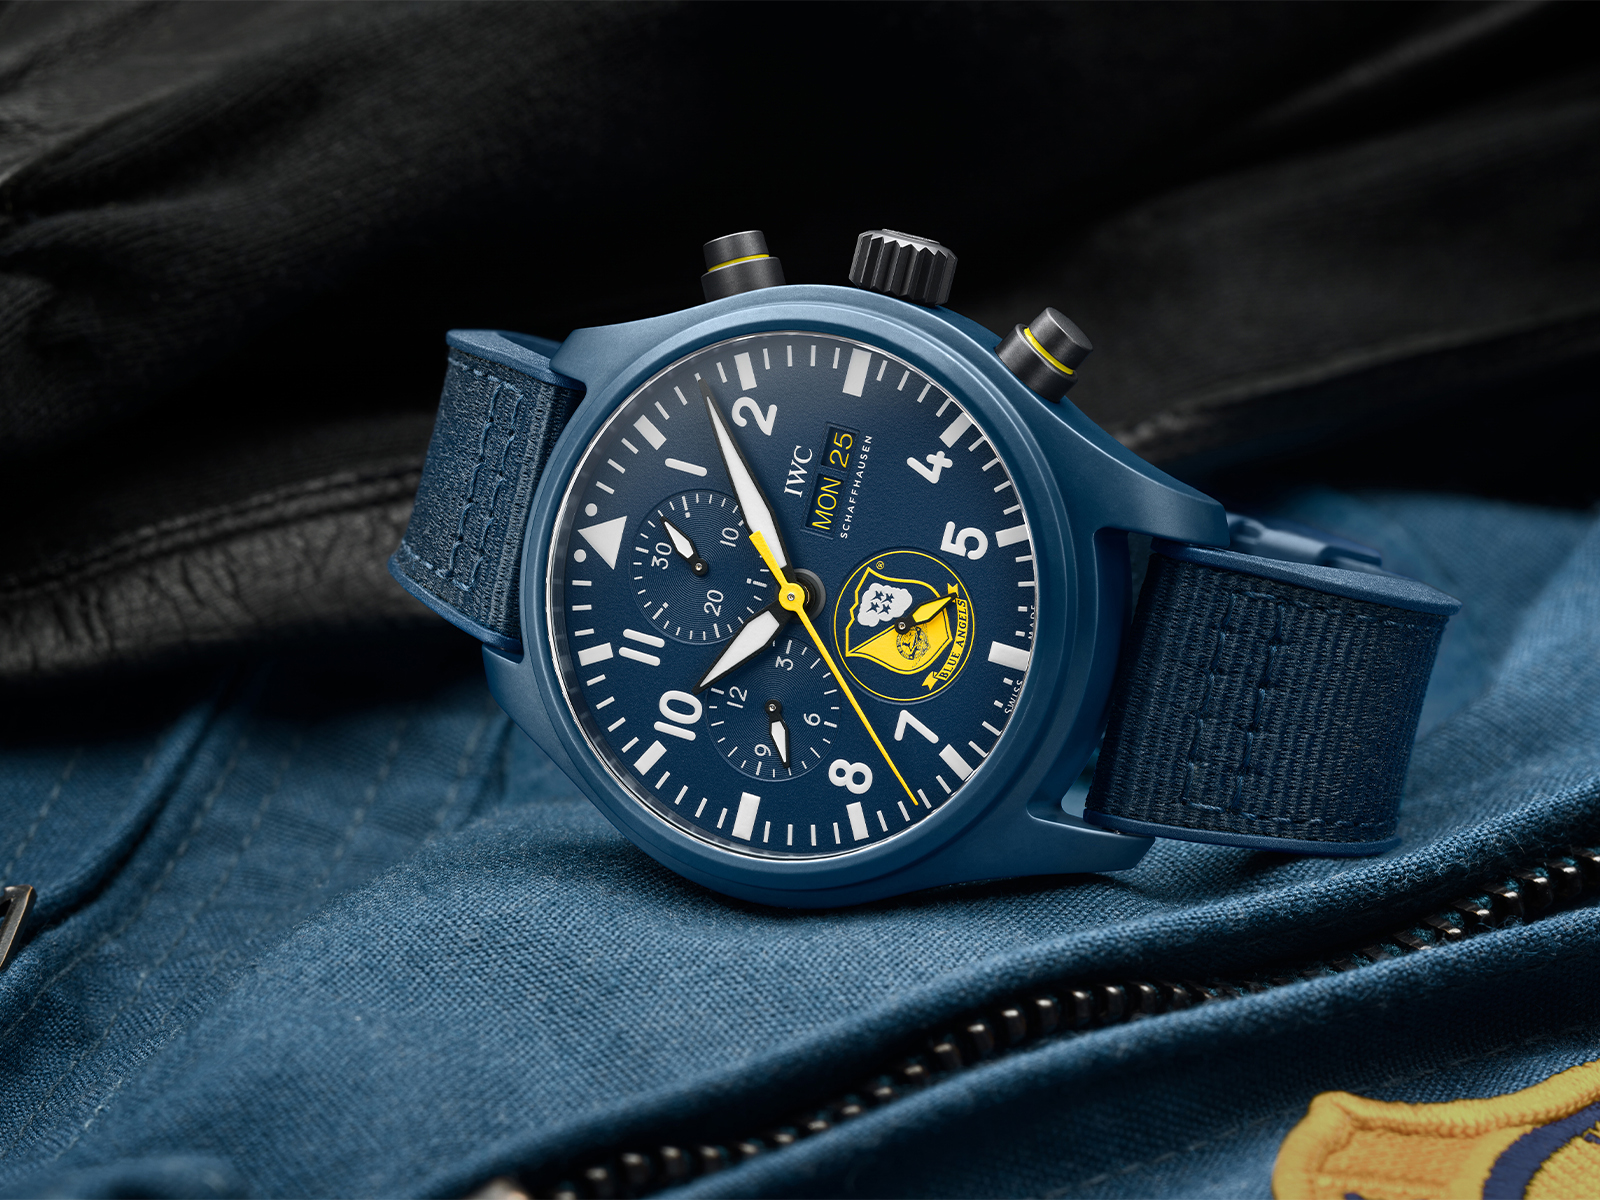 Pilot’s Watch Chronograph Edition “Royal Maces” and the Pilot’s Watch Chronograph Edition “Tophatters”